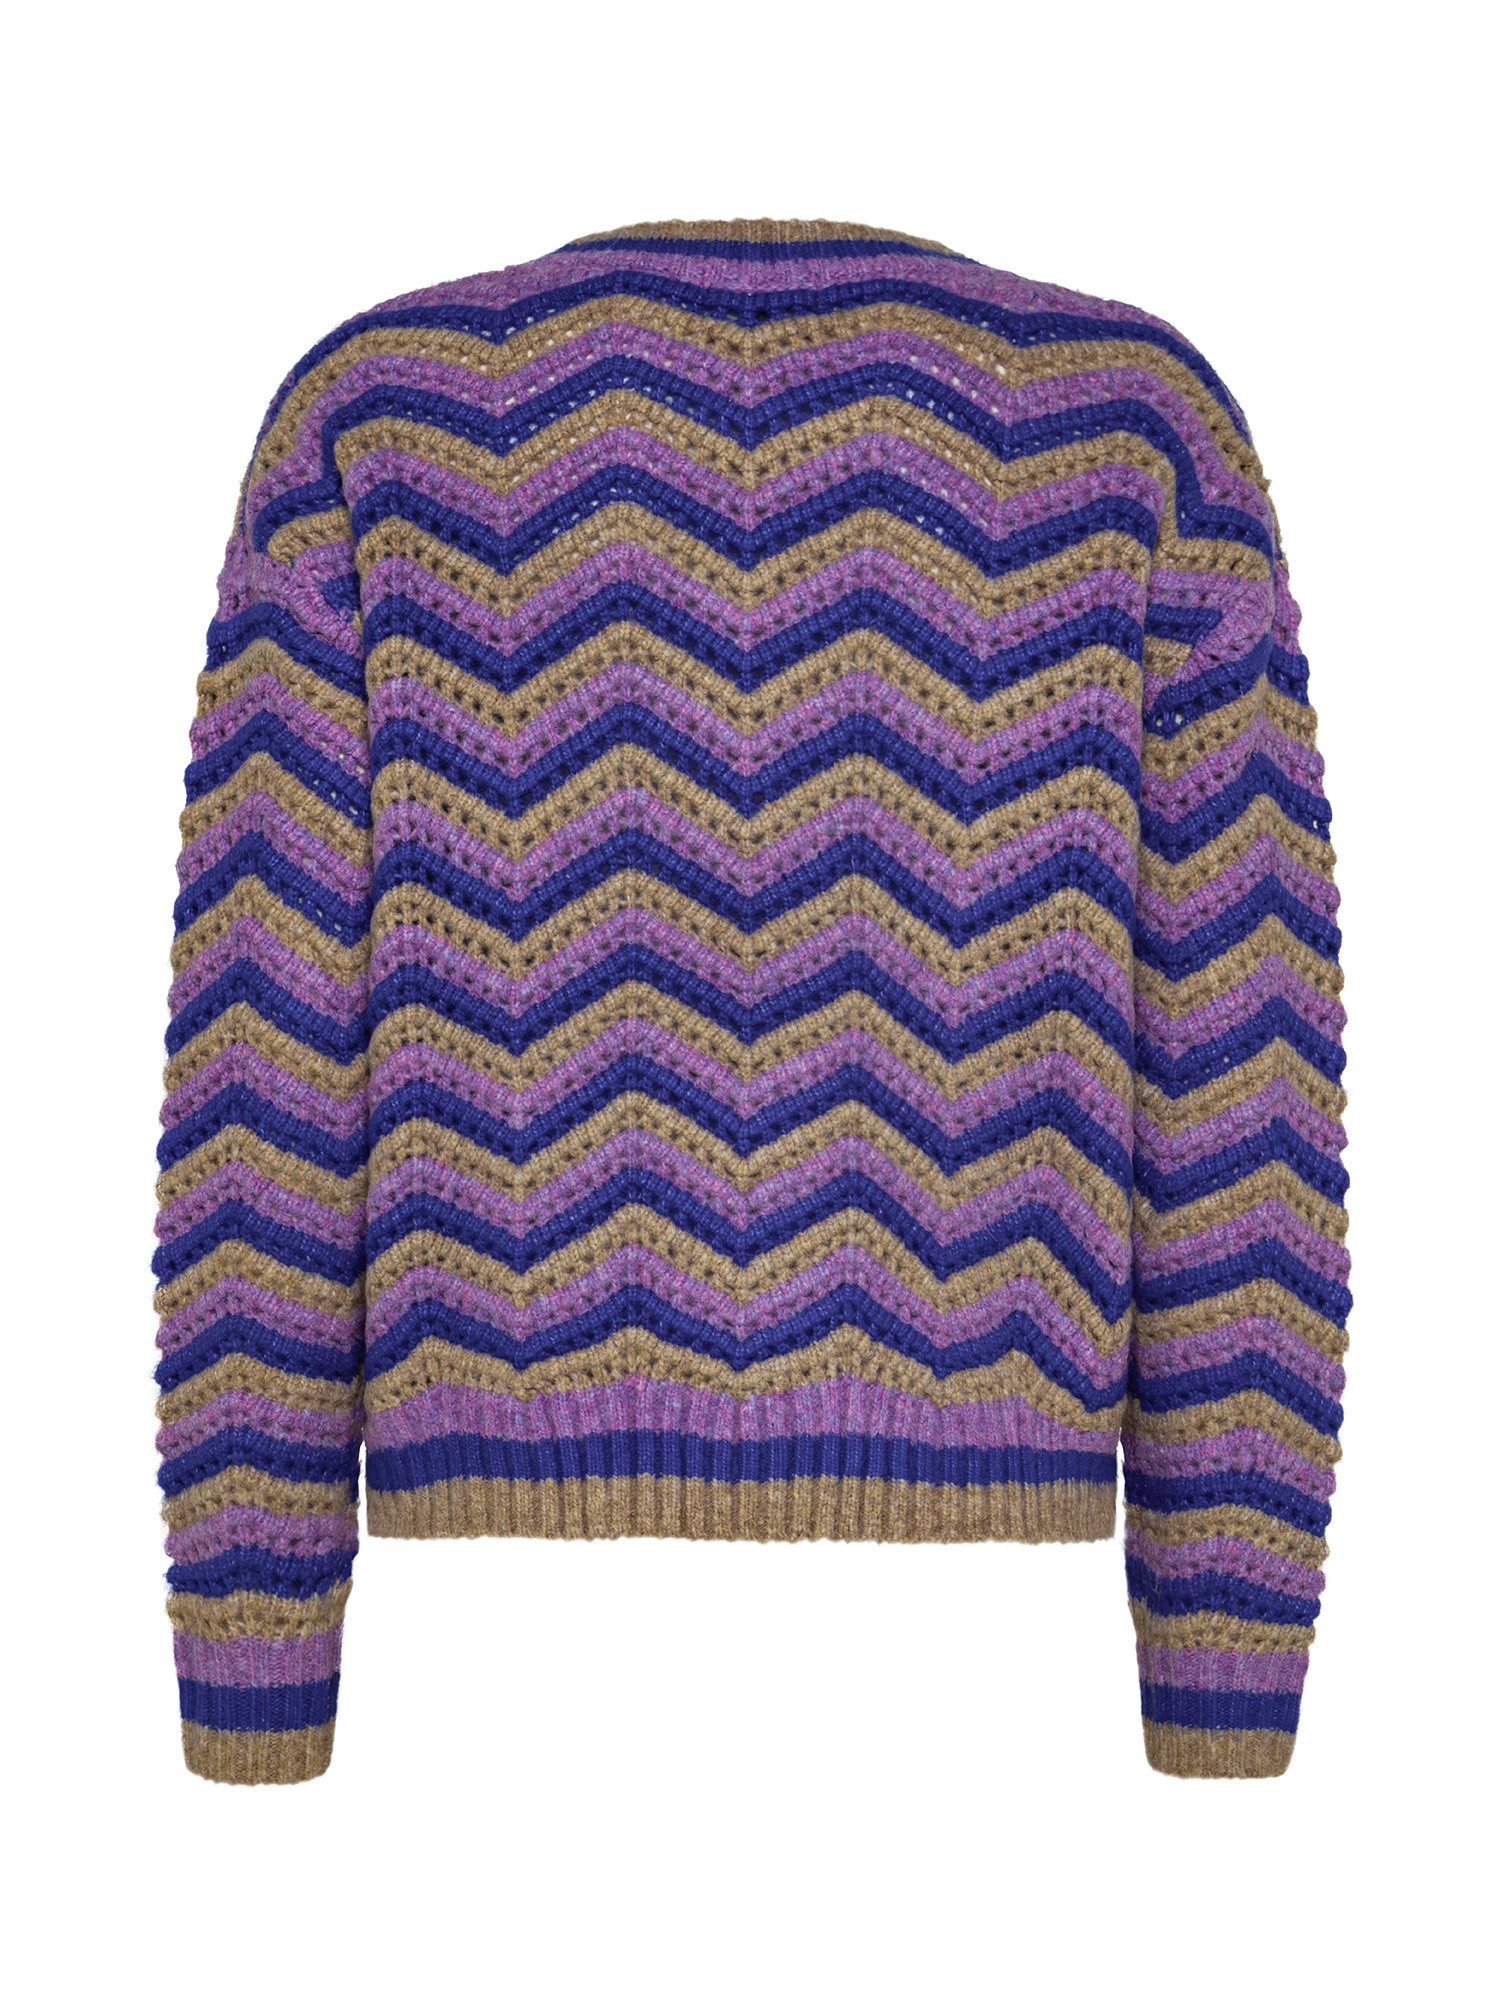 Koan - Patterned crewneck pullover, Multicolor, large image number 1